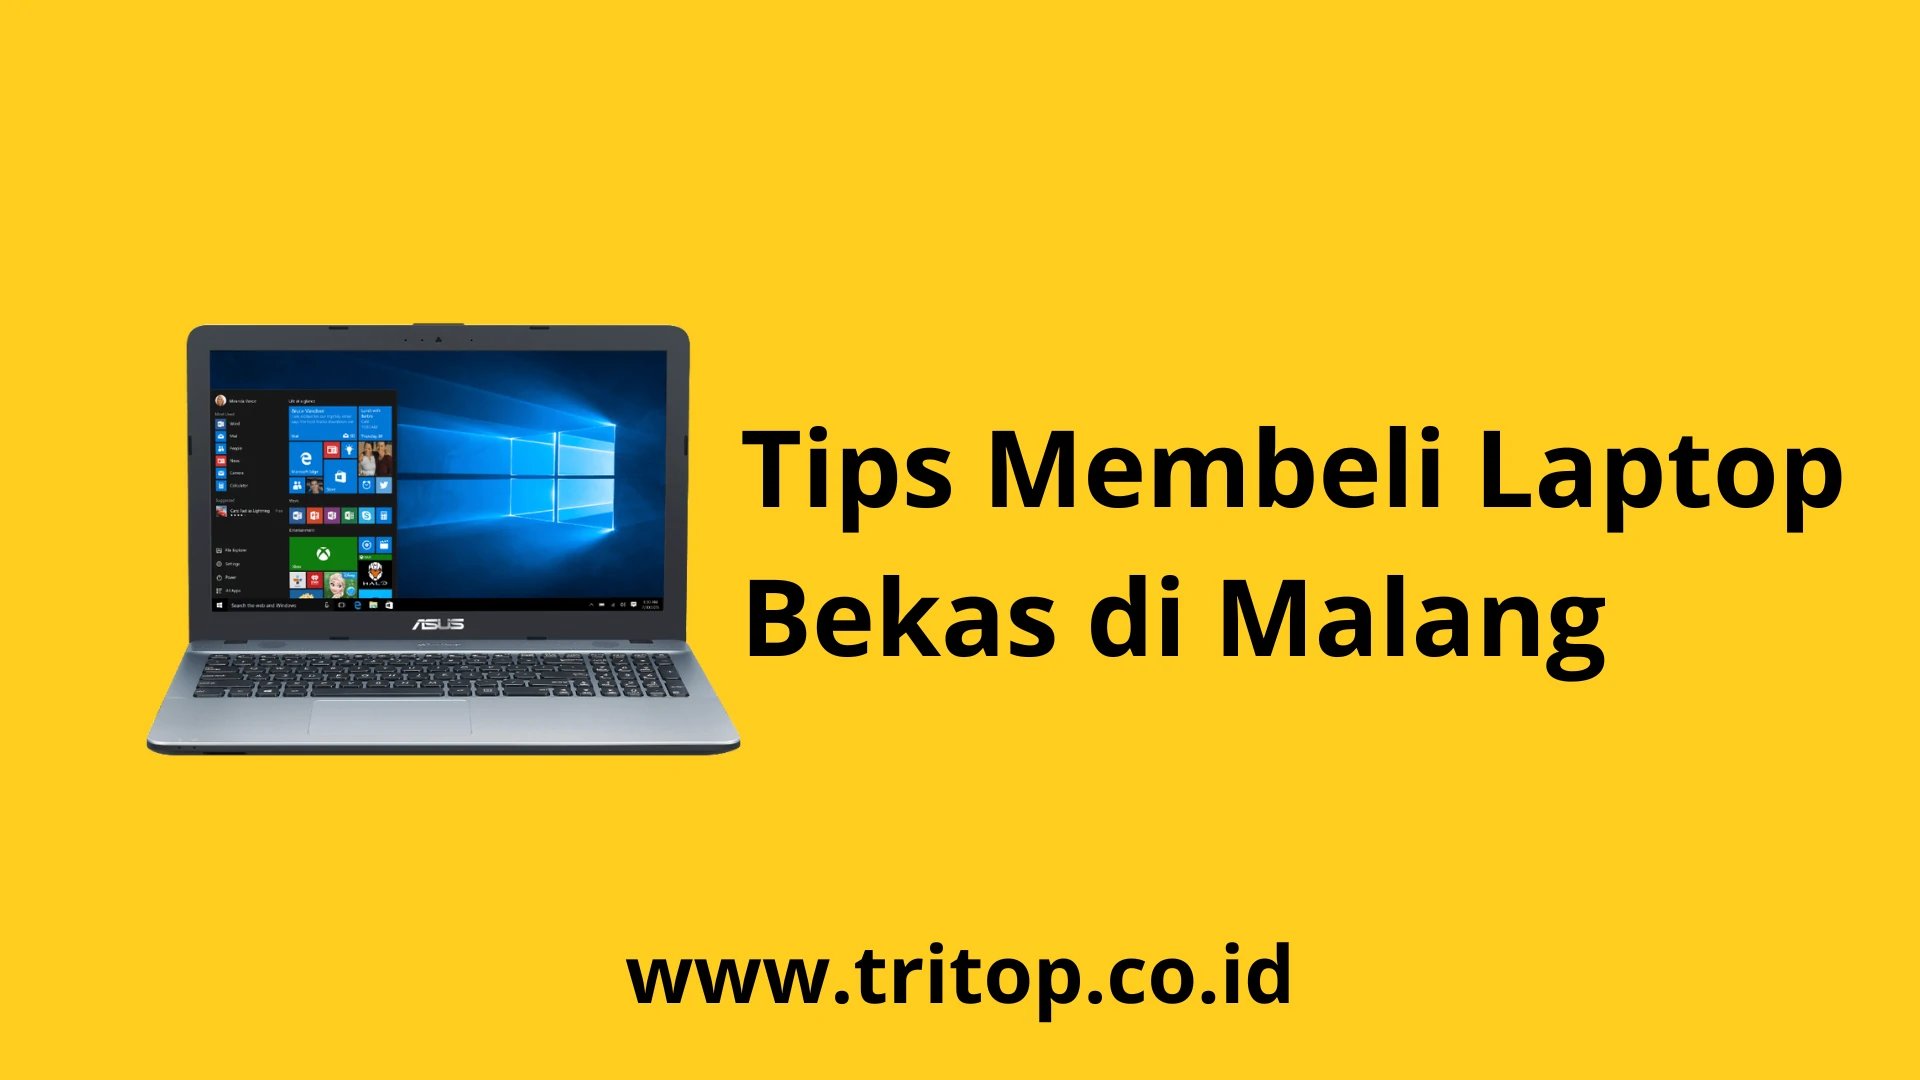 Laptop Bekas di Malang Tritop.co.id